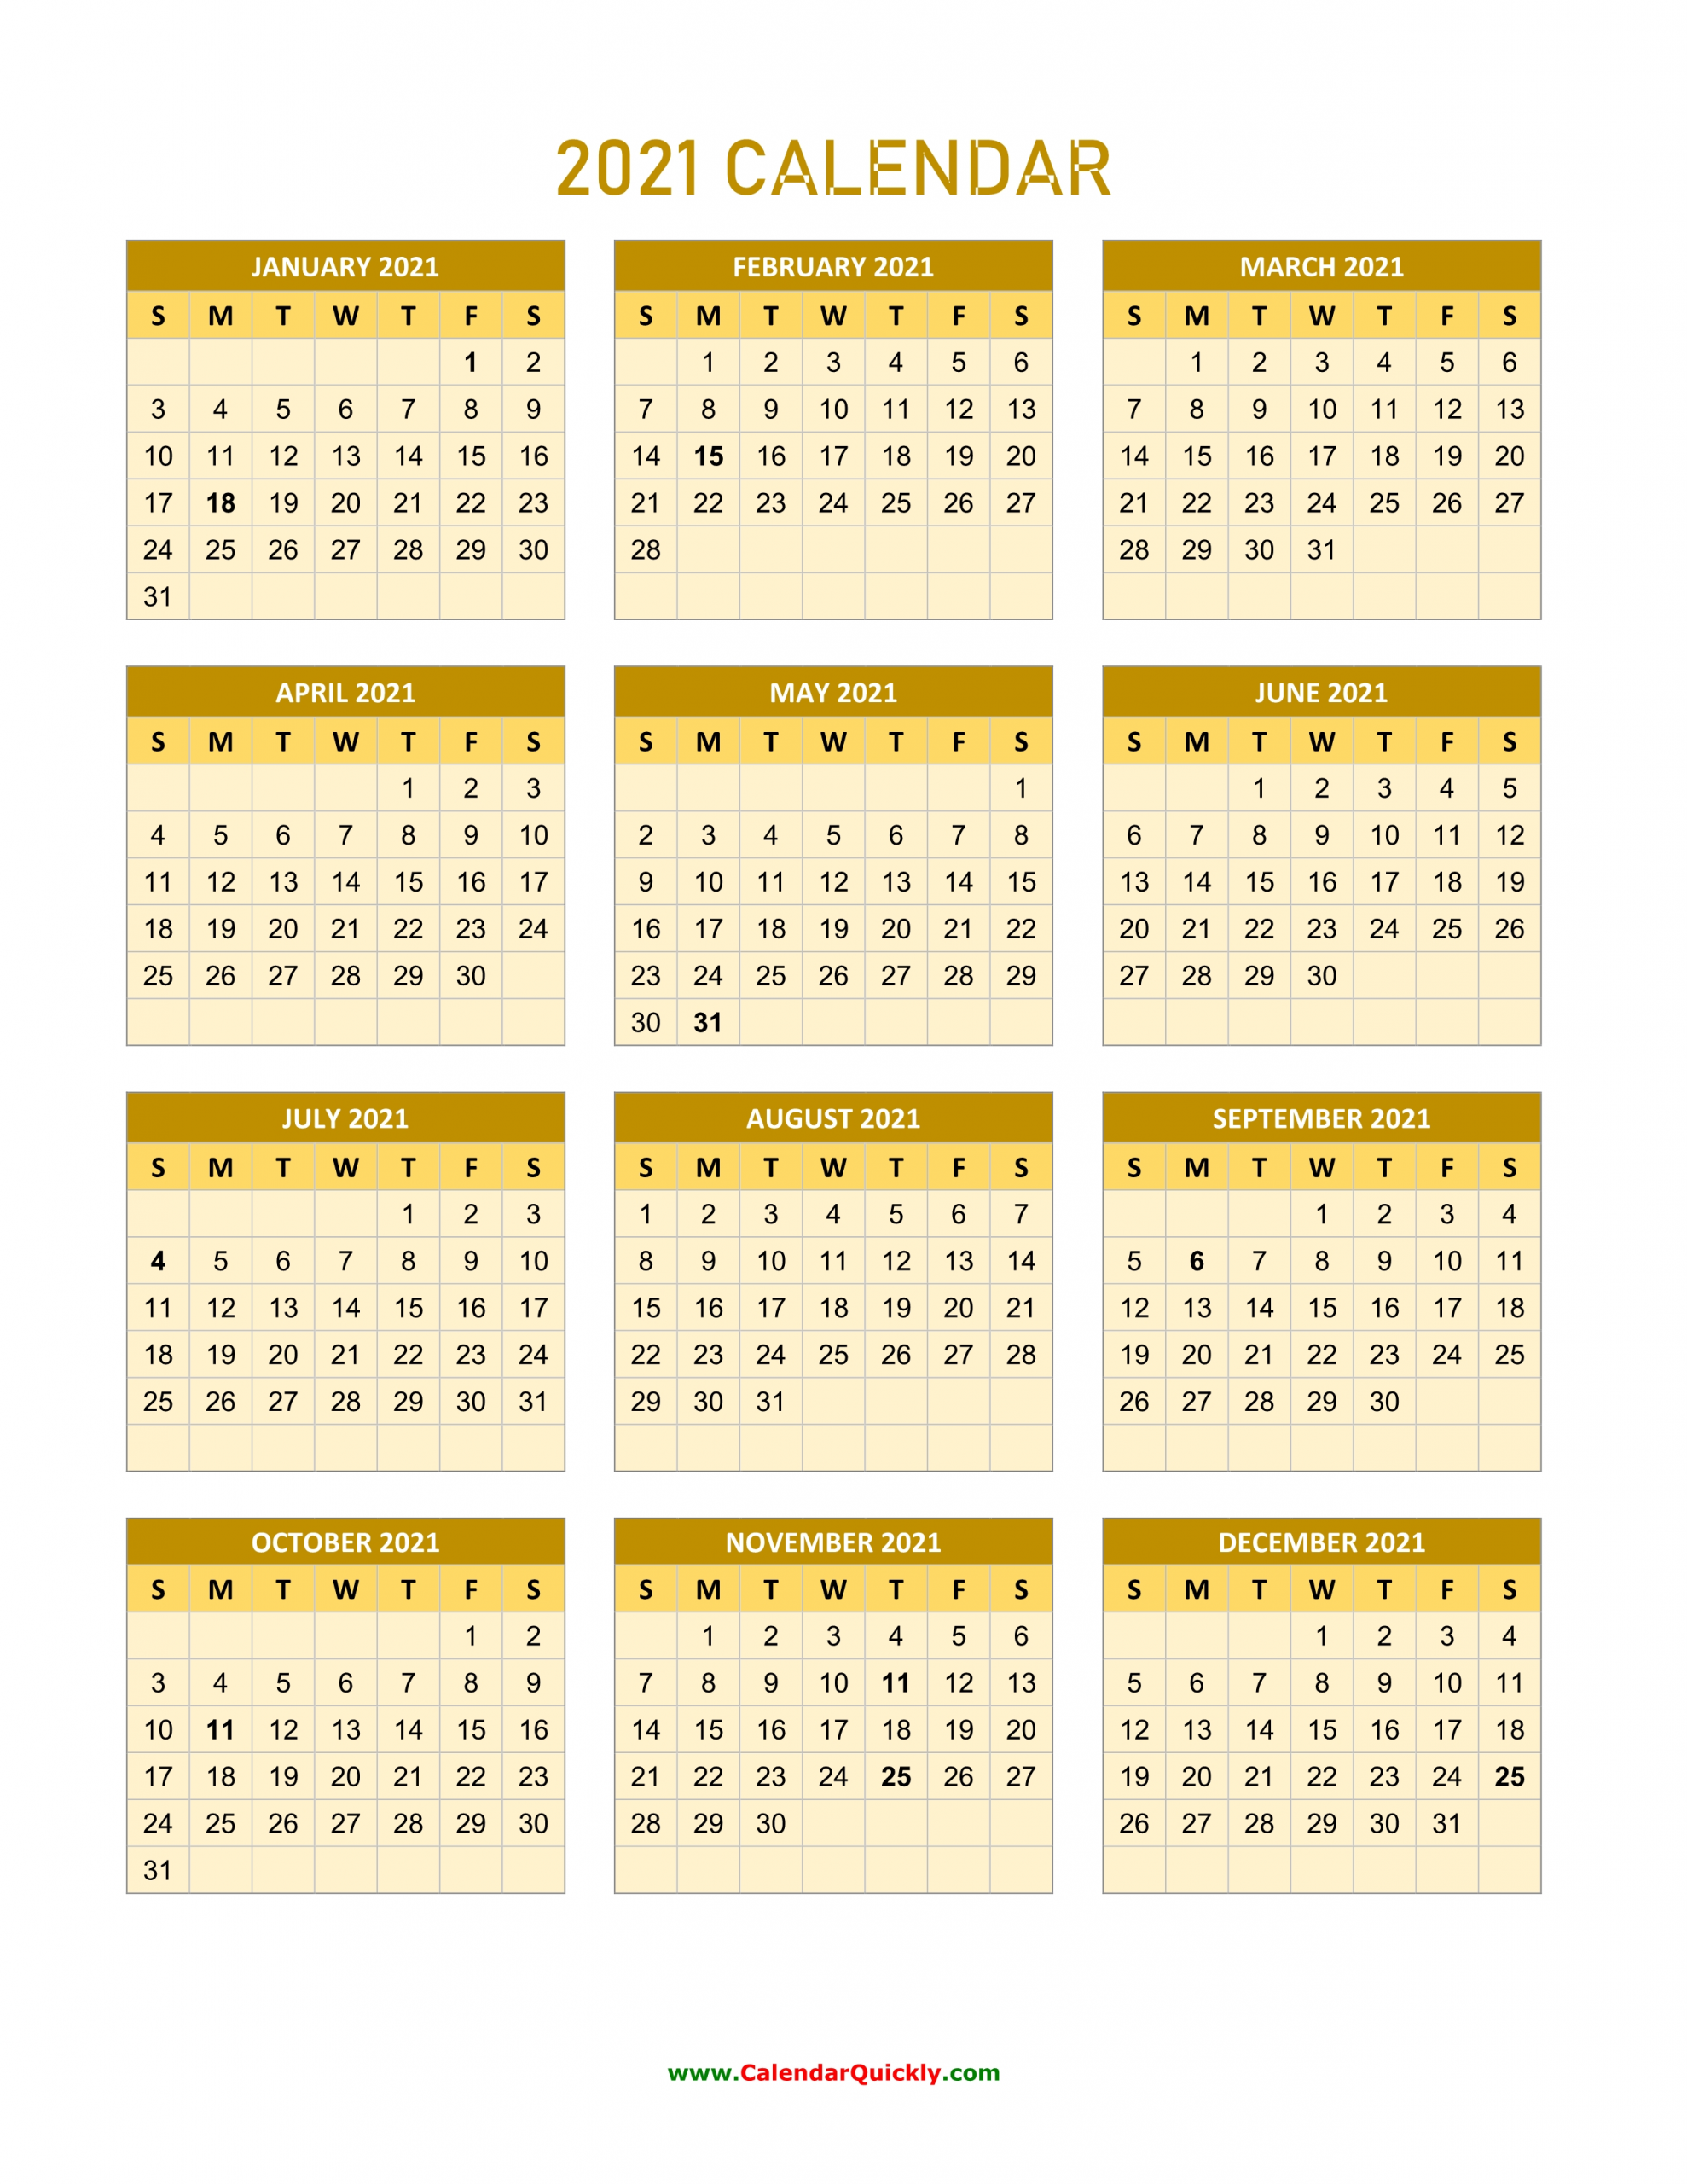 2021 calendar vertical | calendar quickly